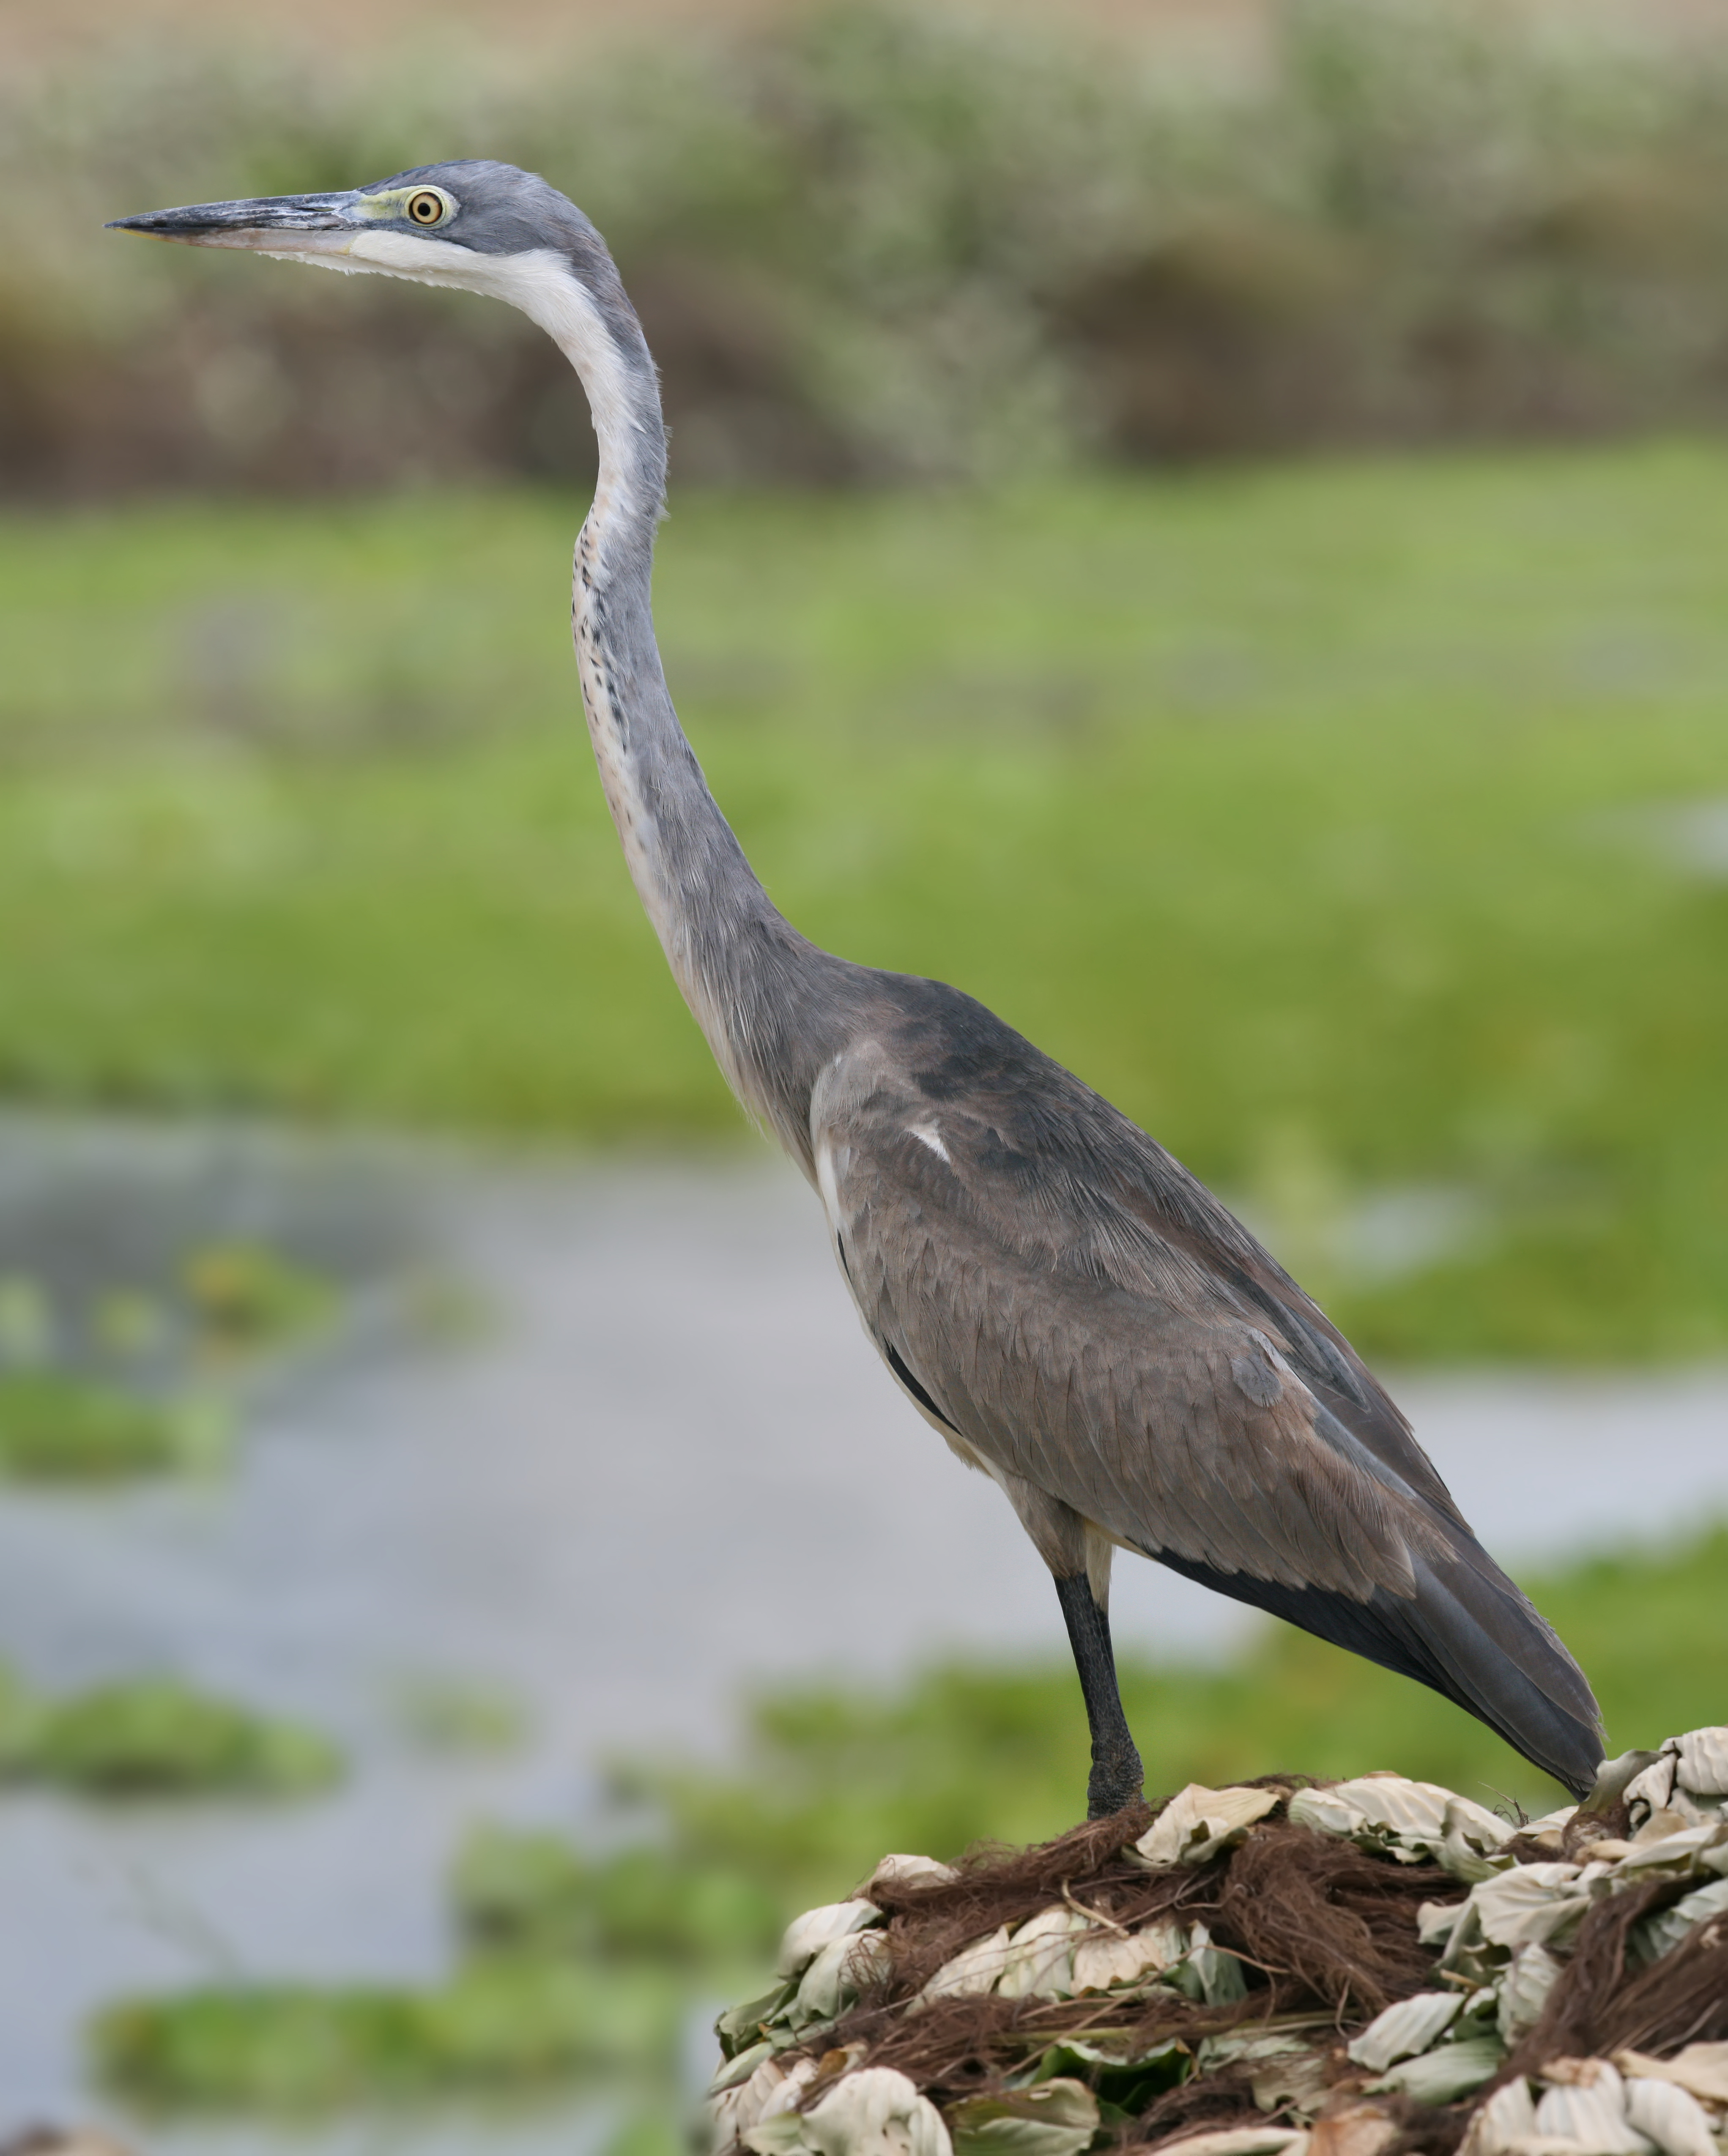 Black-headed heron - Wikipedia